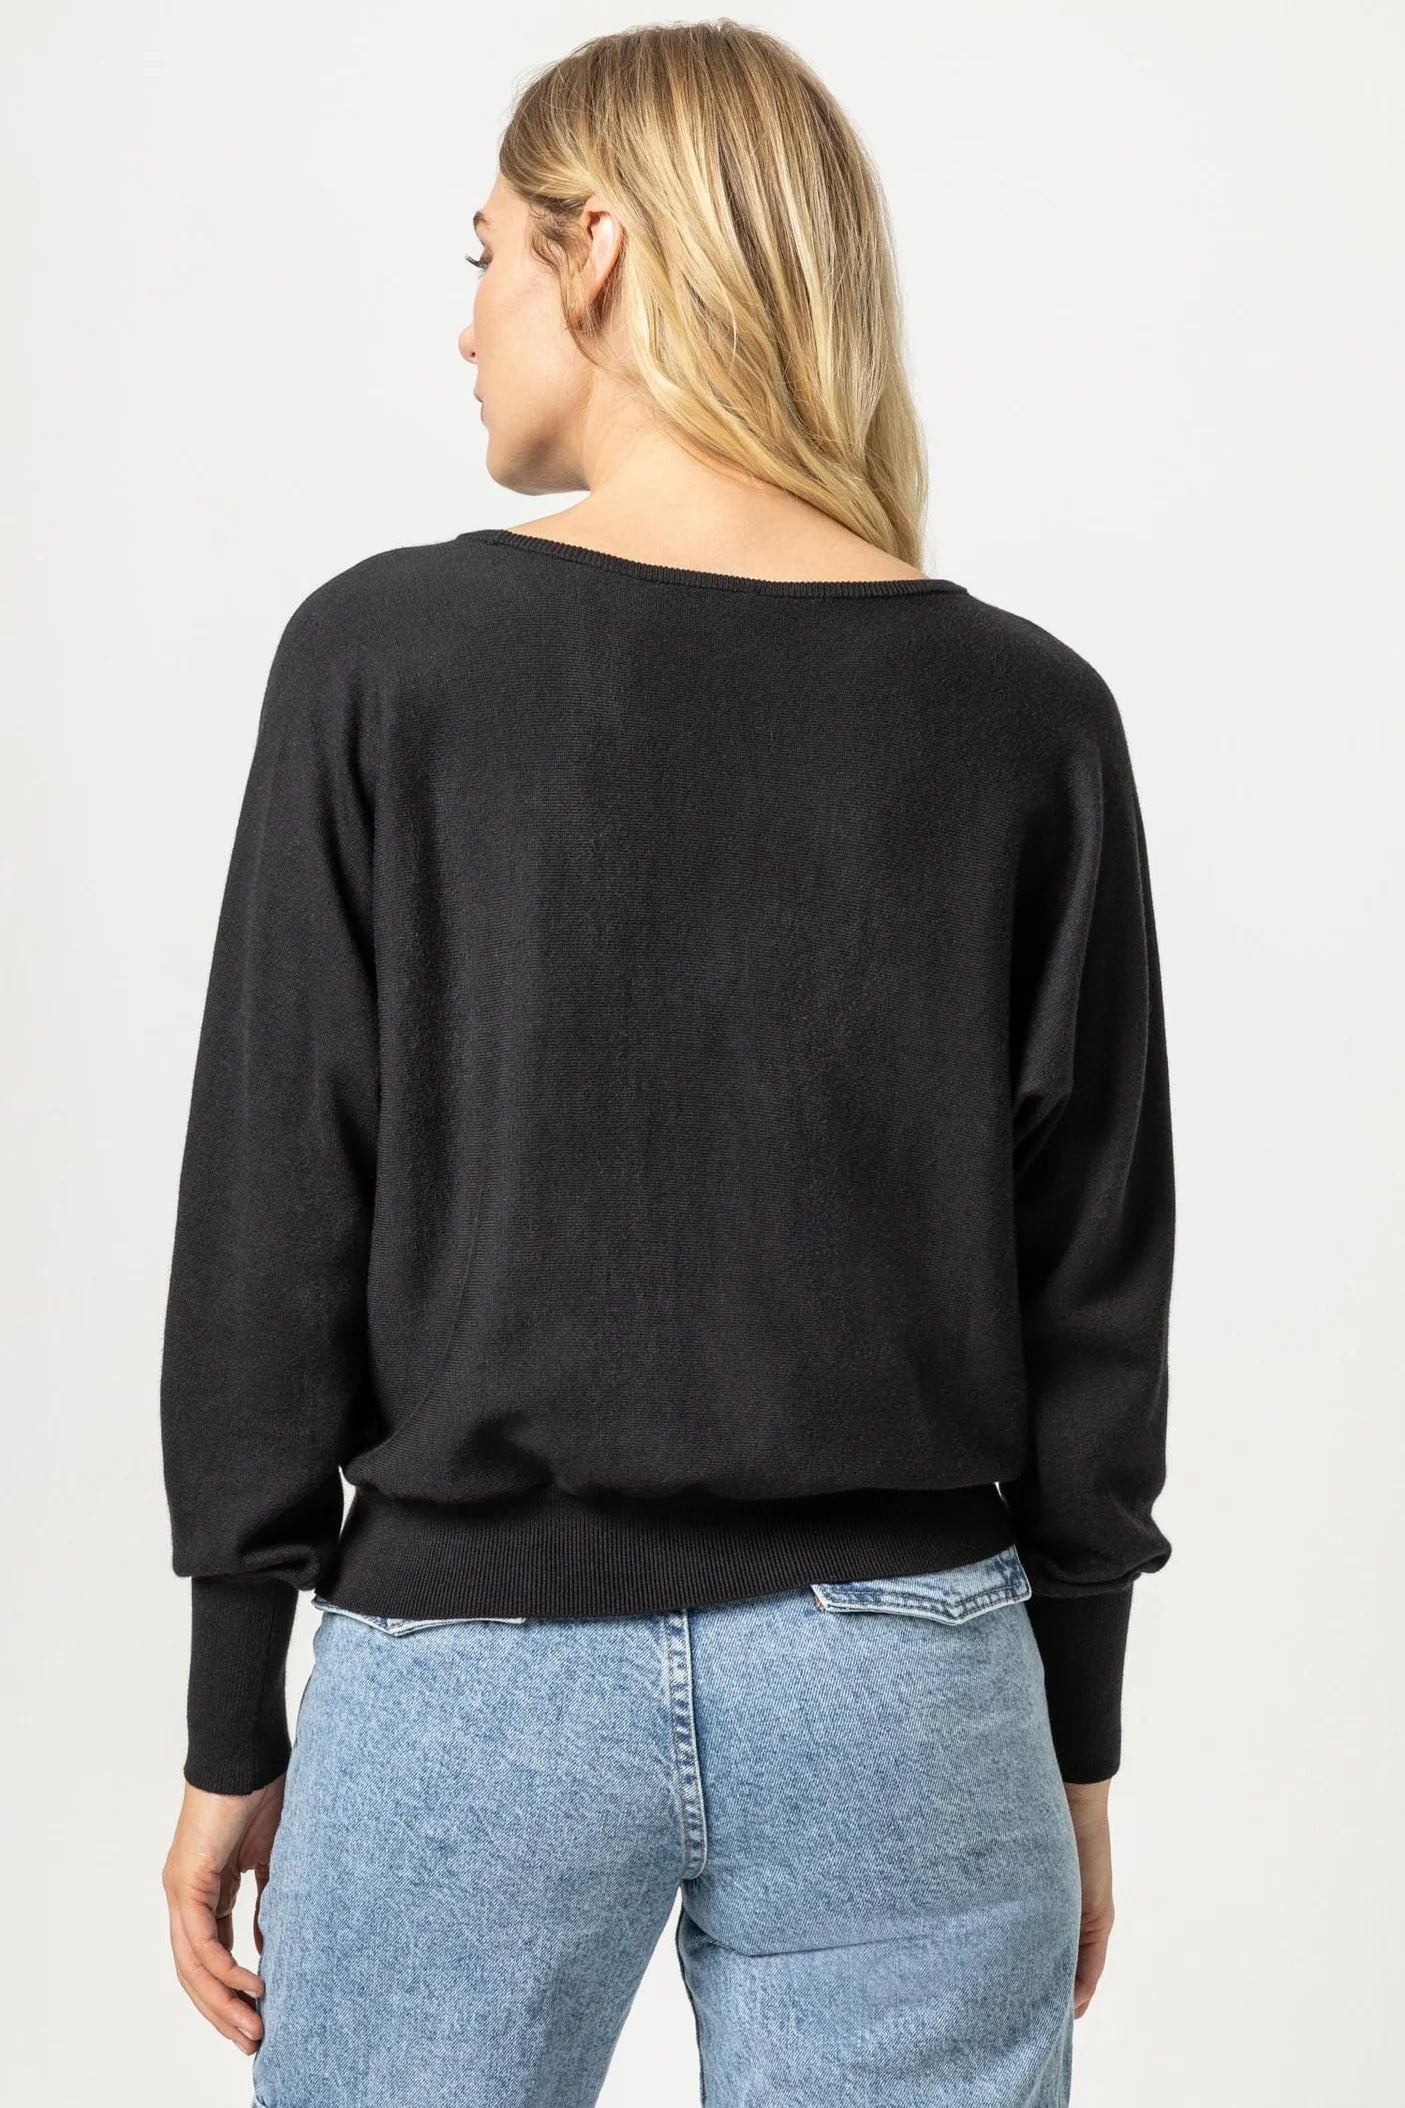 Boatneck Dolman Sweater in black by Lilla P